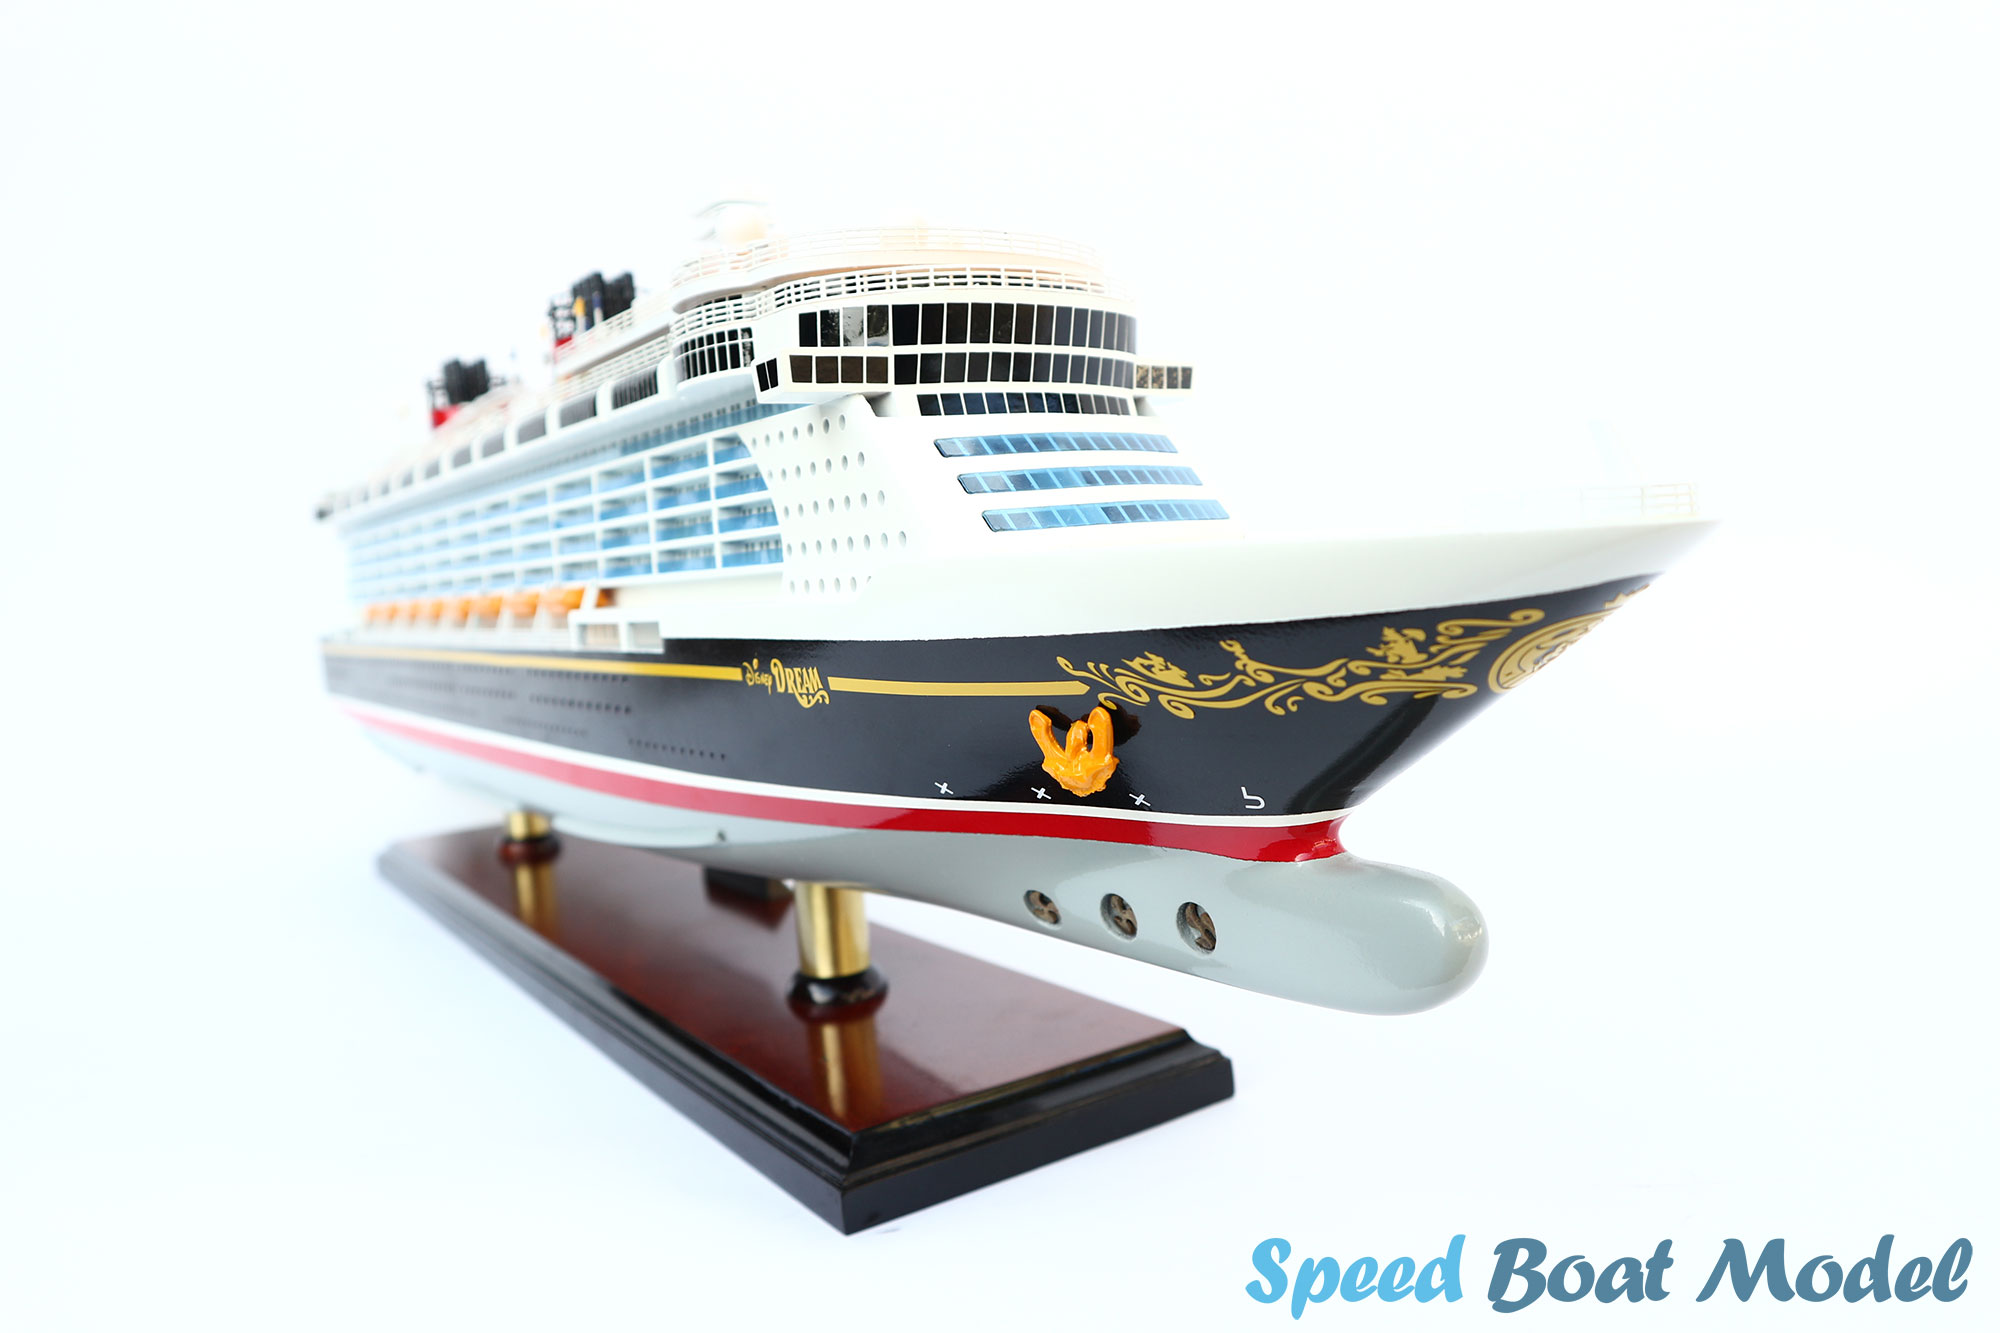 Disney Dream Cruise Ship Model 32.2"